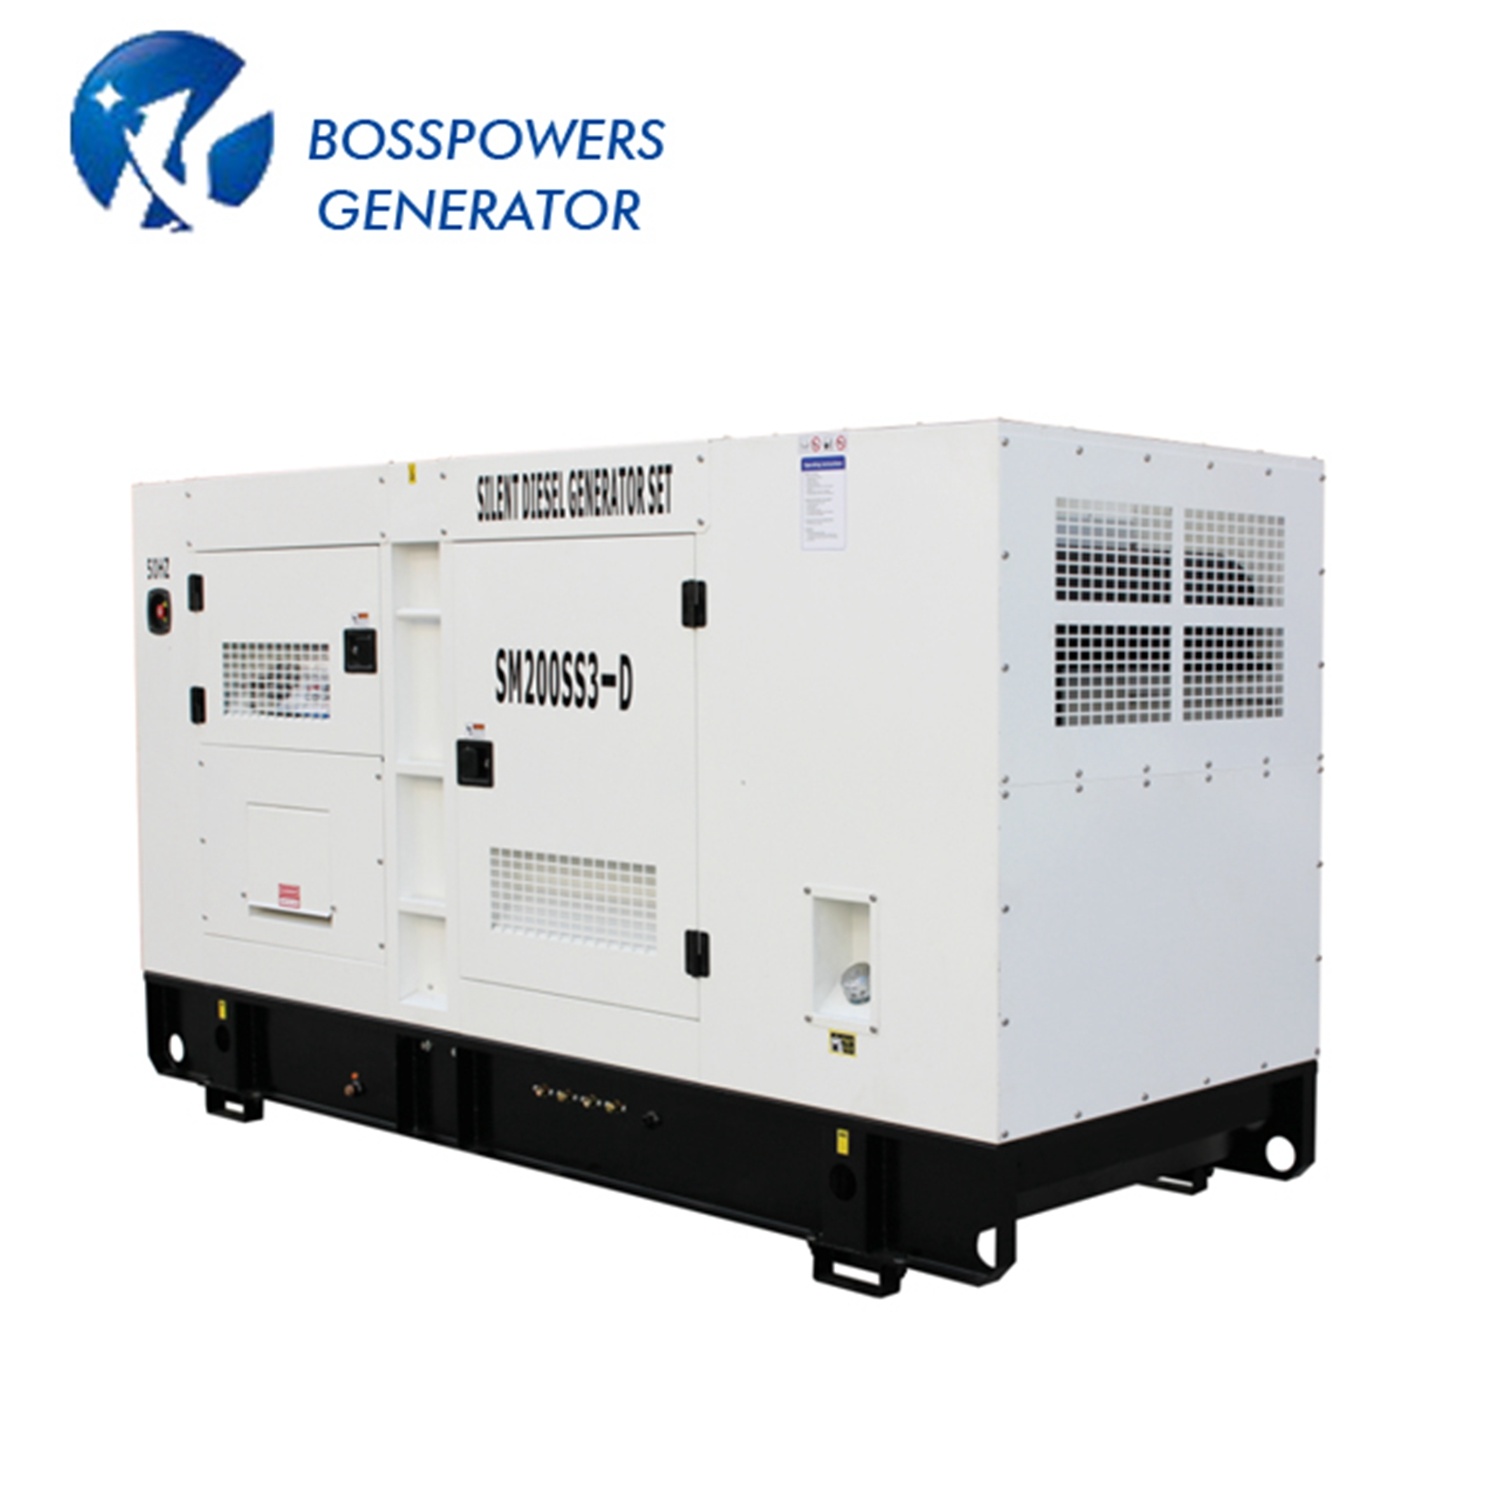 Electrical Industry Generator Diesel 290kw 60Hz Powered by Huachai Deutz Engine